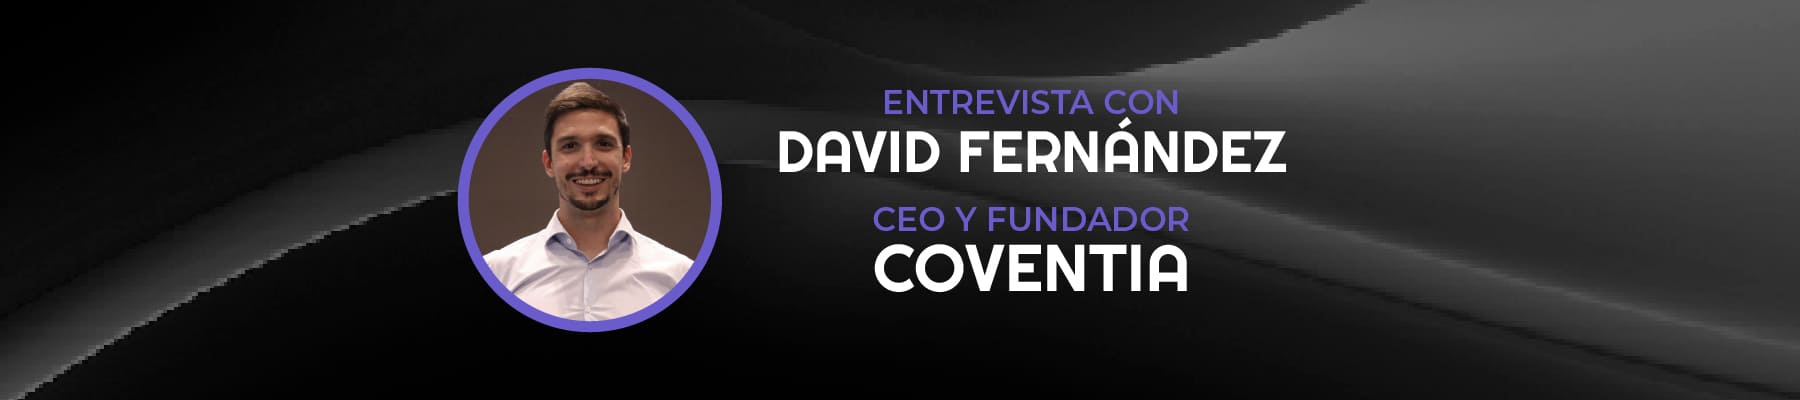 Entrevista a David Fernández, CEO